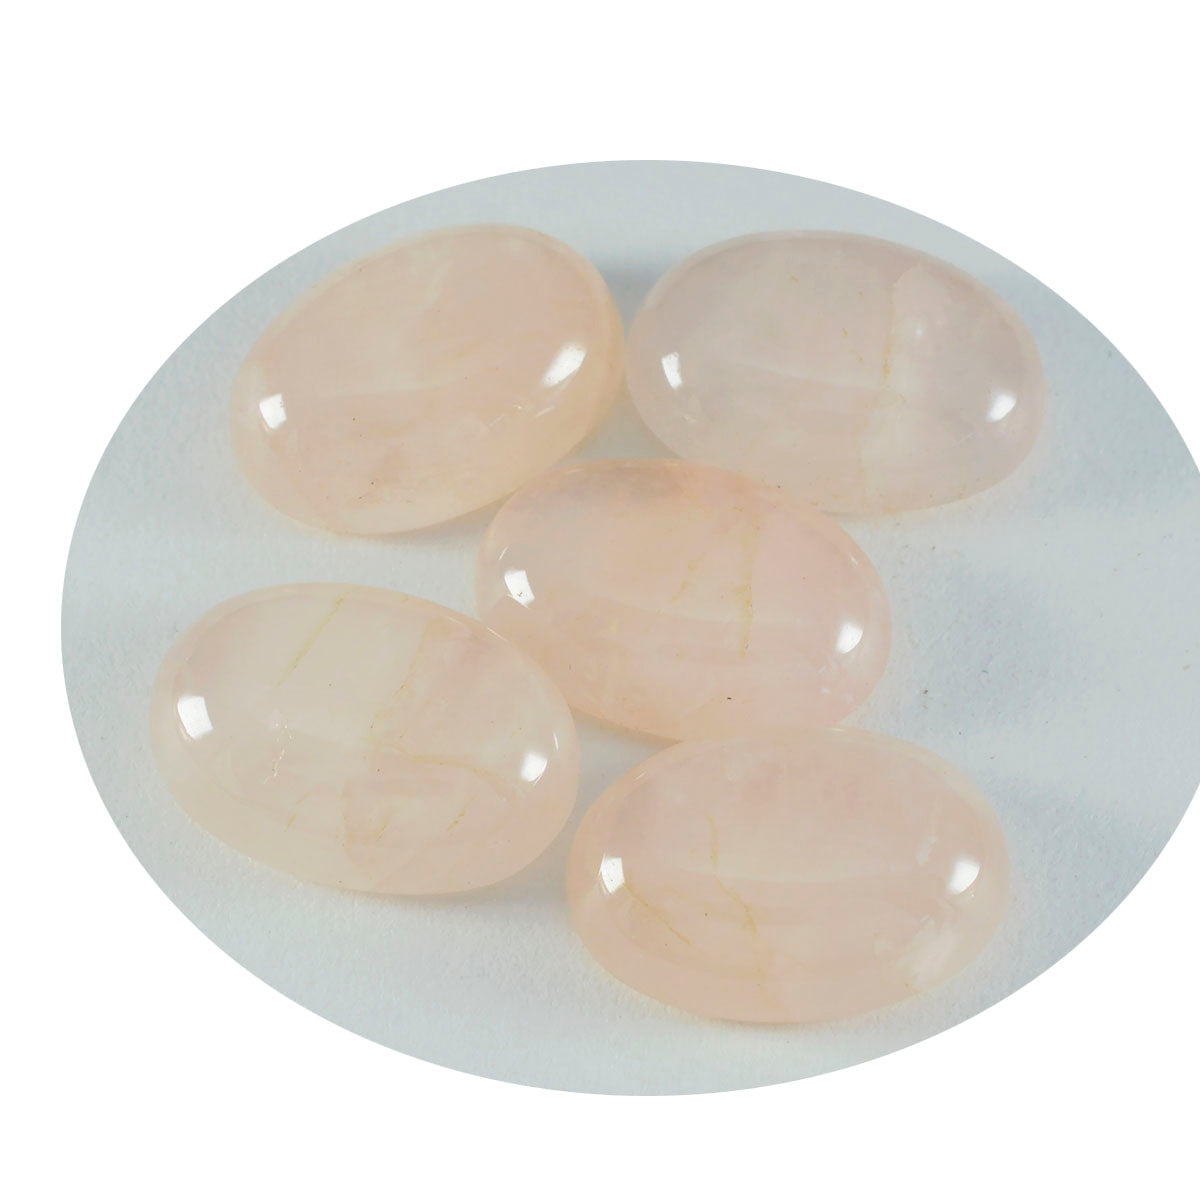 Riyogems 1PC roze rozenkwarts cabochon 12x16 mm ovale vorm zoete kwaliteitssteen